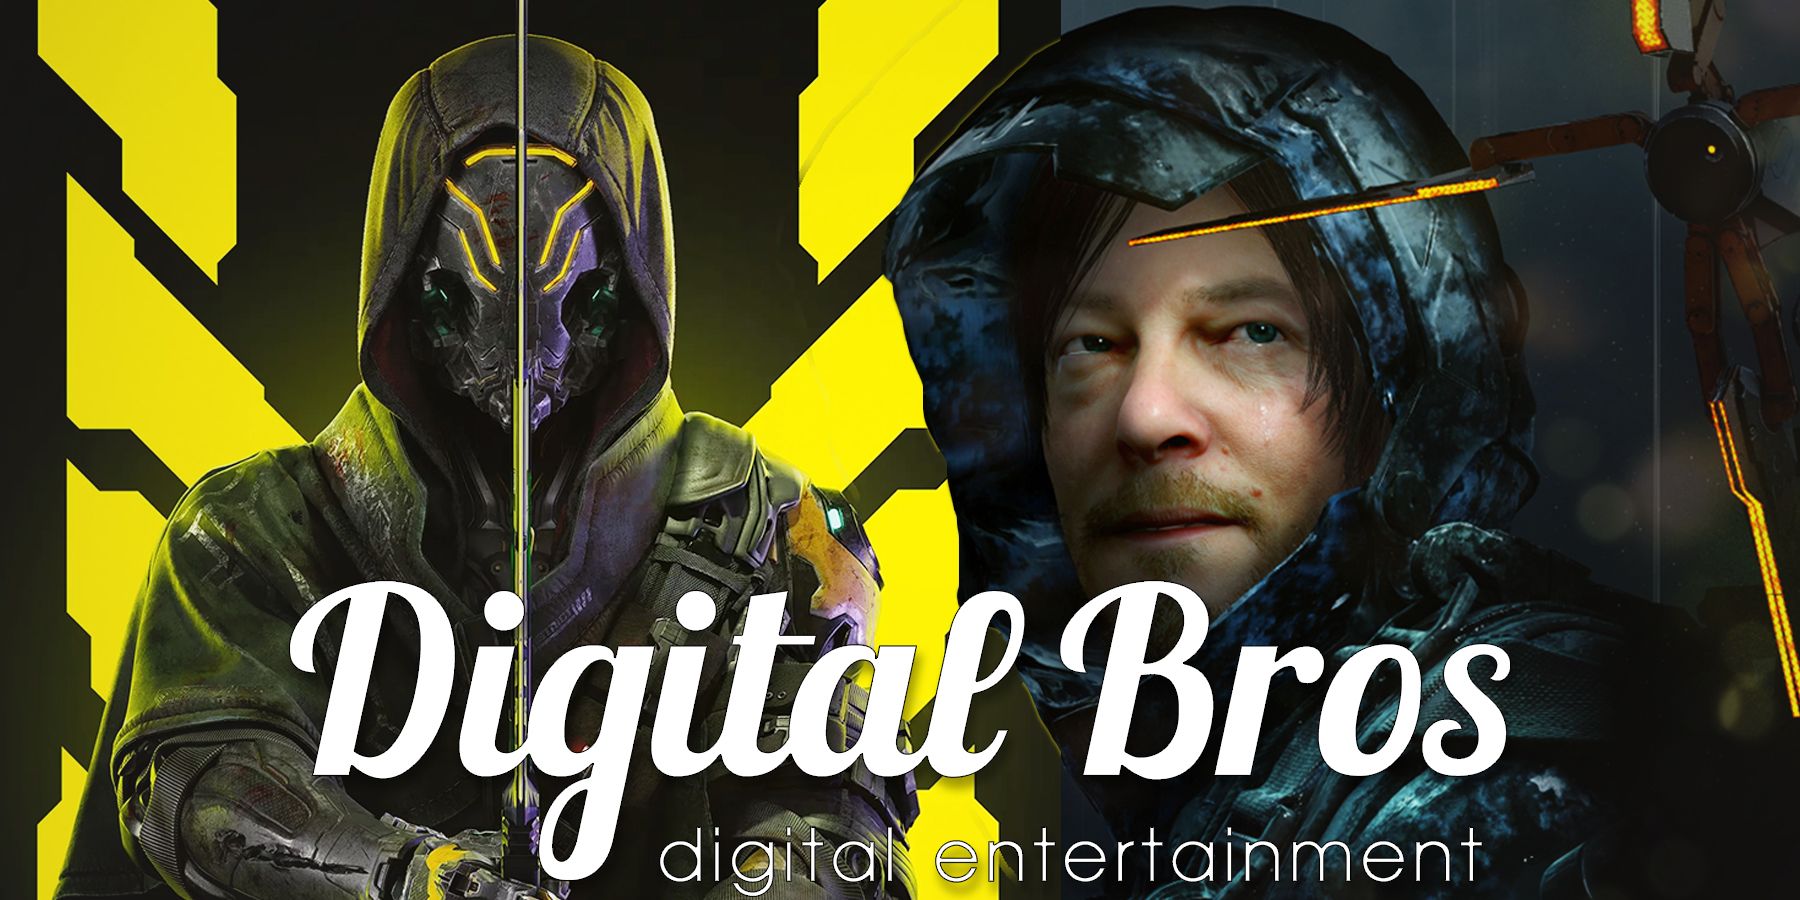 Ghostrunner Death Stranding artworks behind  Digital Bros Digital Entertainment logo